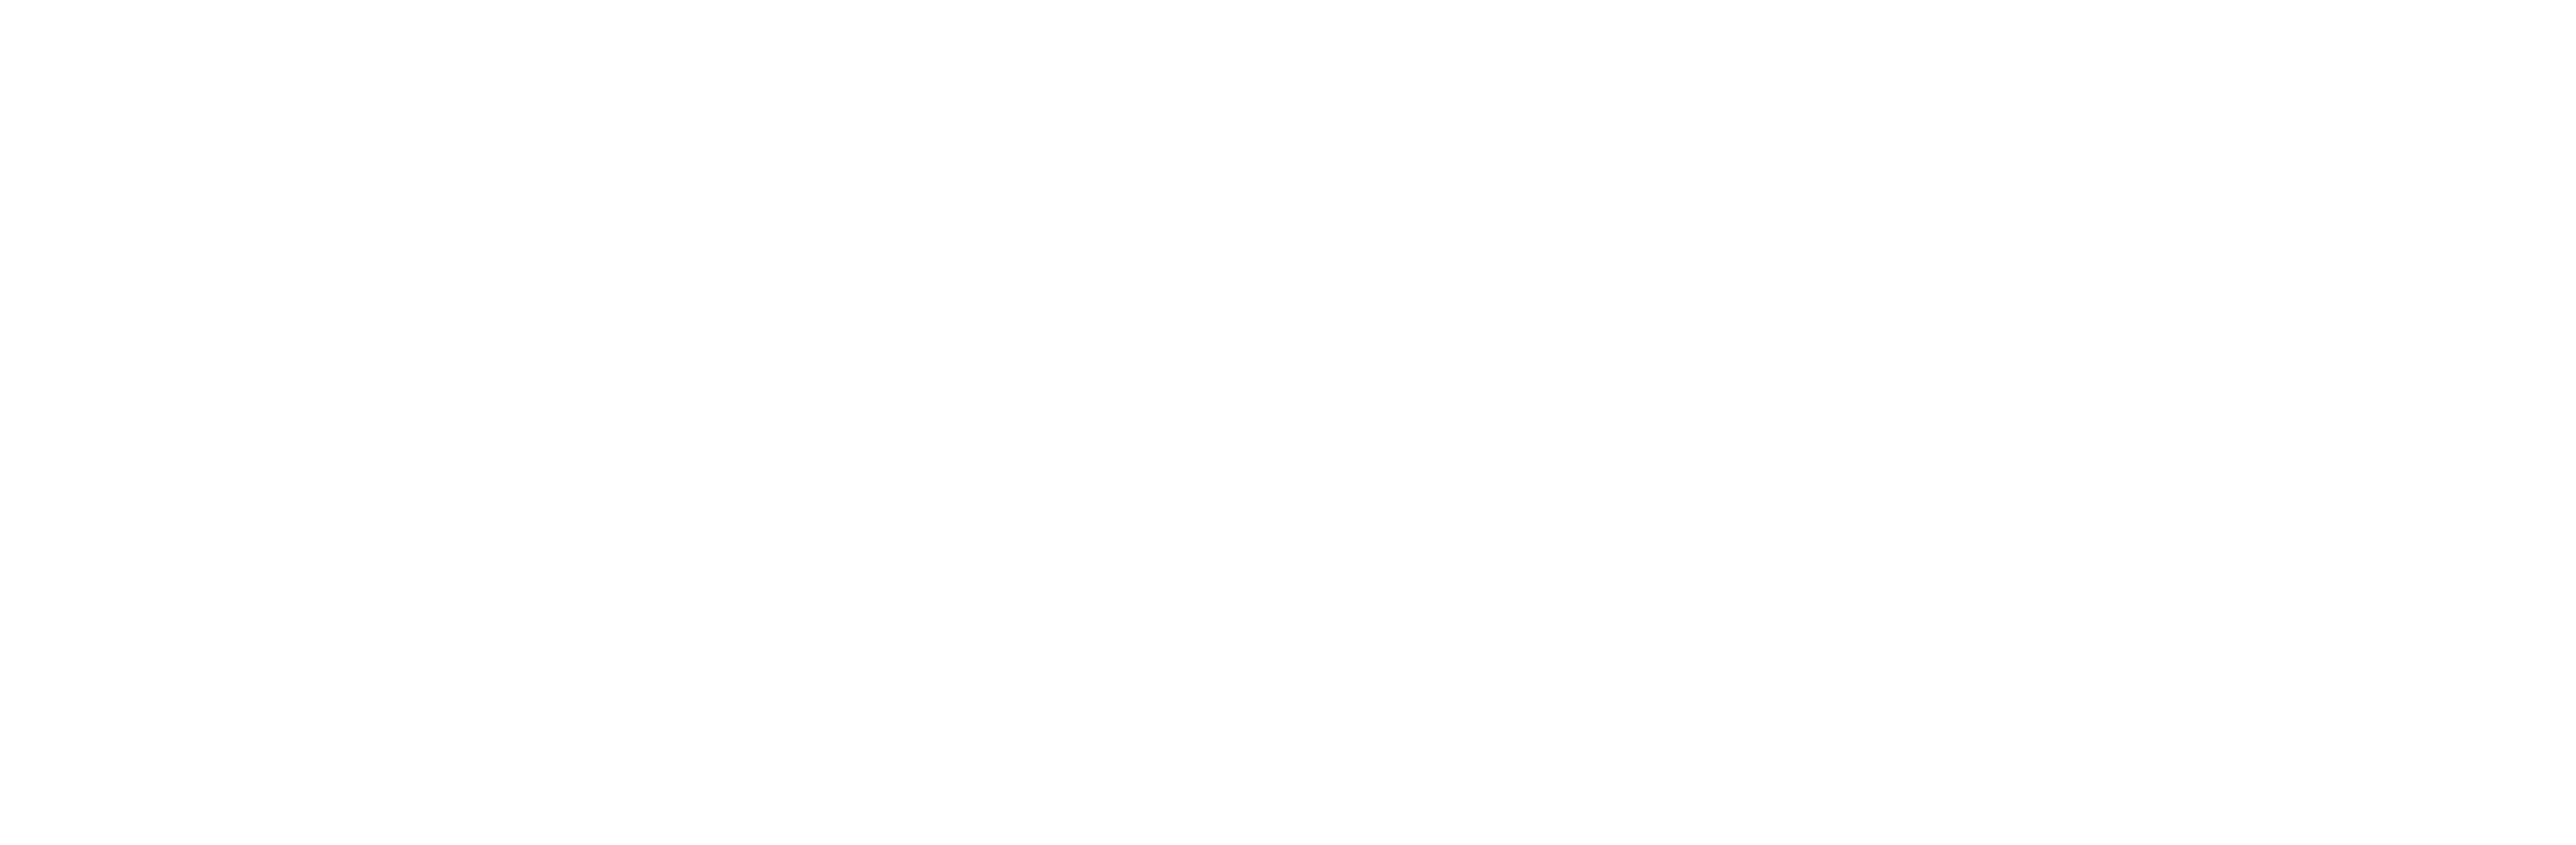 Logo of the Accor loyalty program 